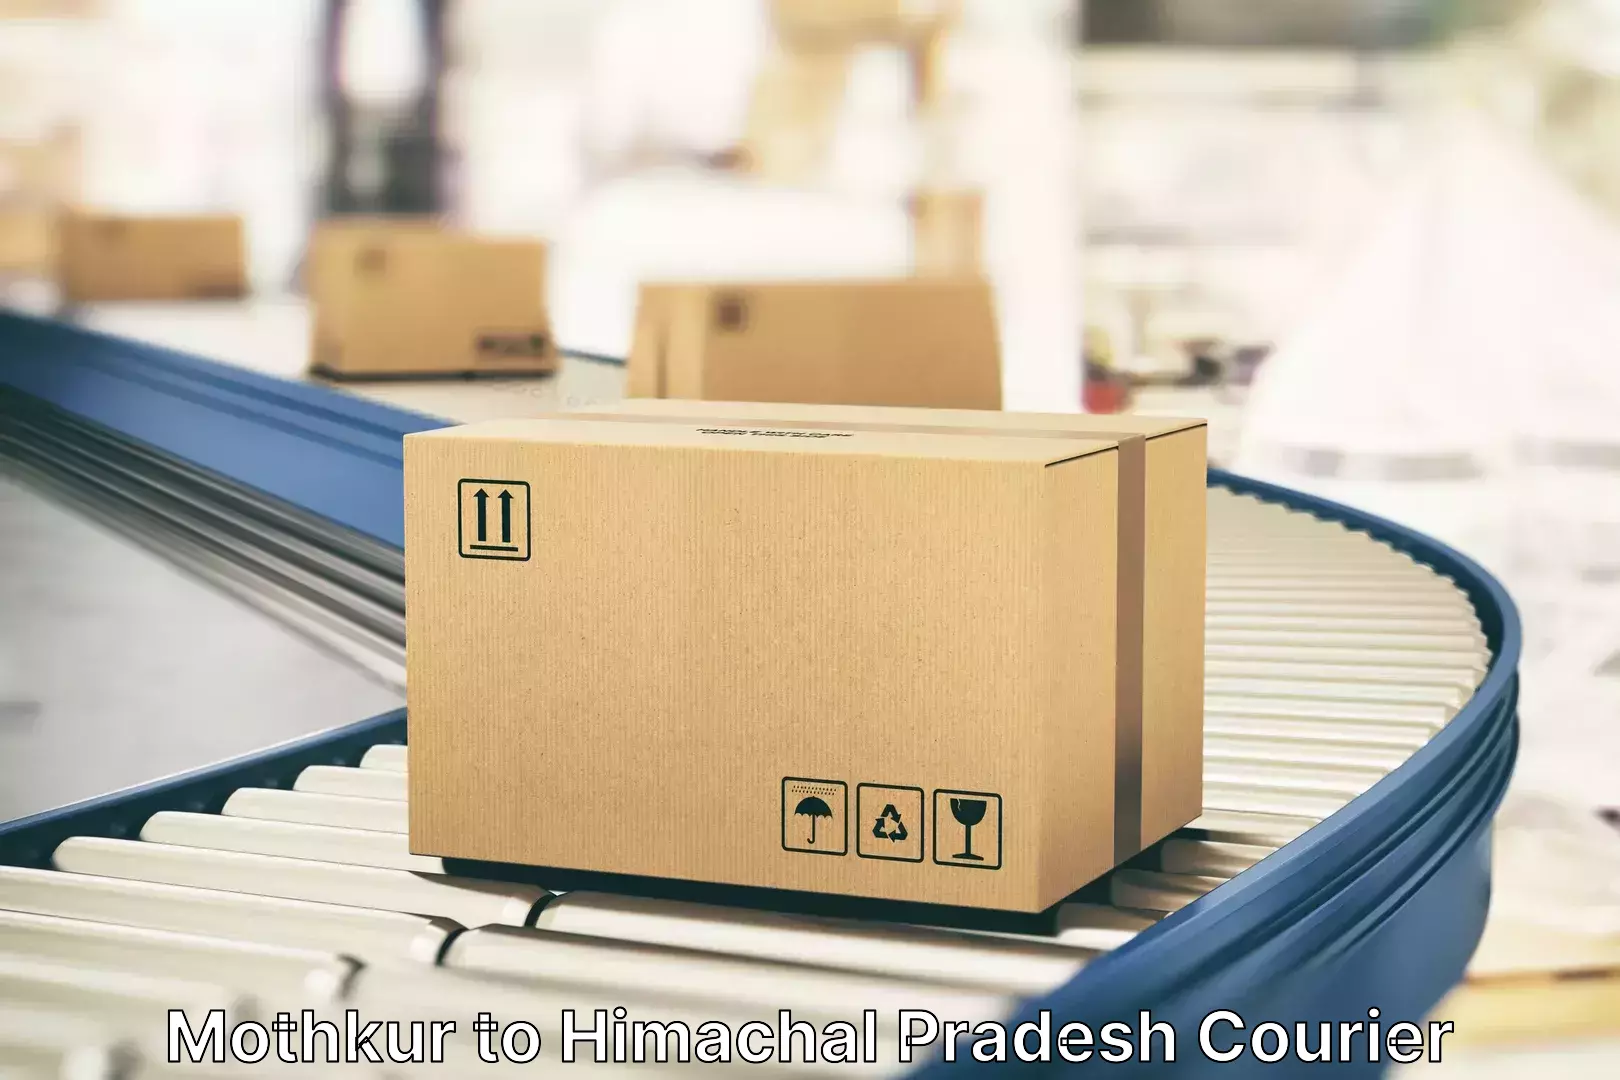 Luggage shipment strategy Mothkur to Himachal Pradesh